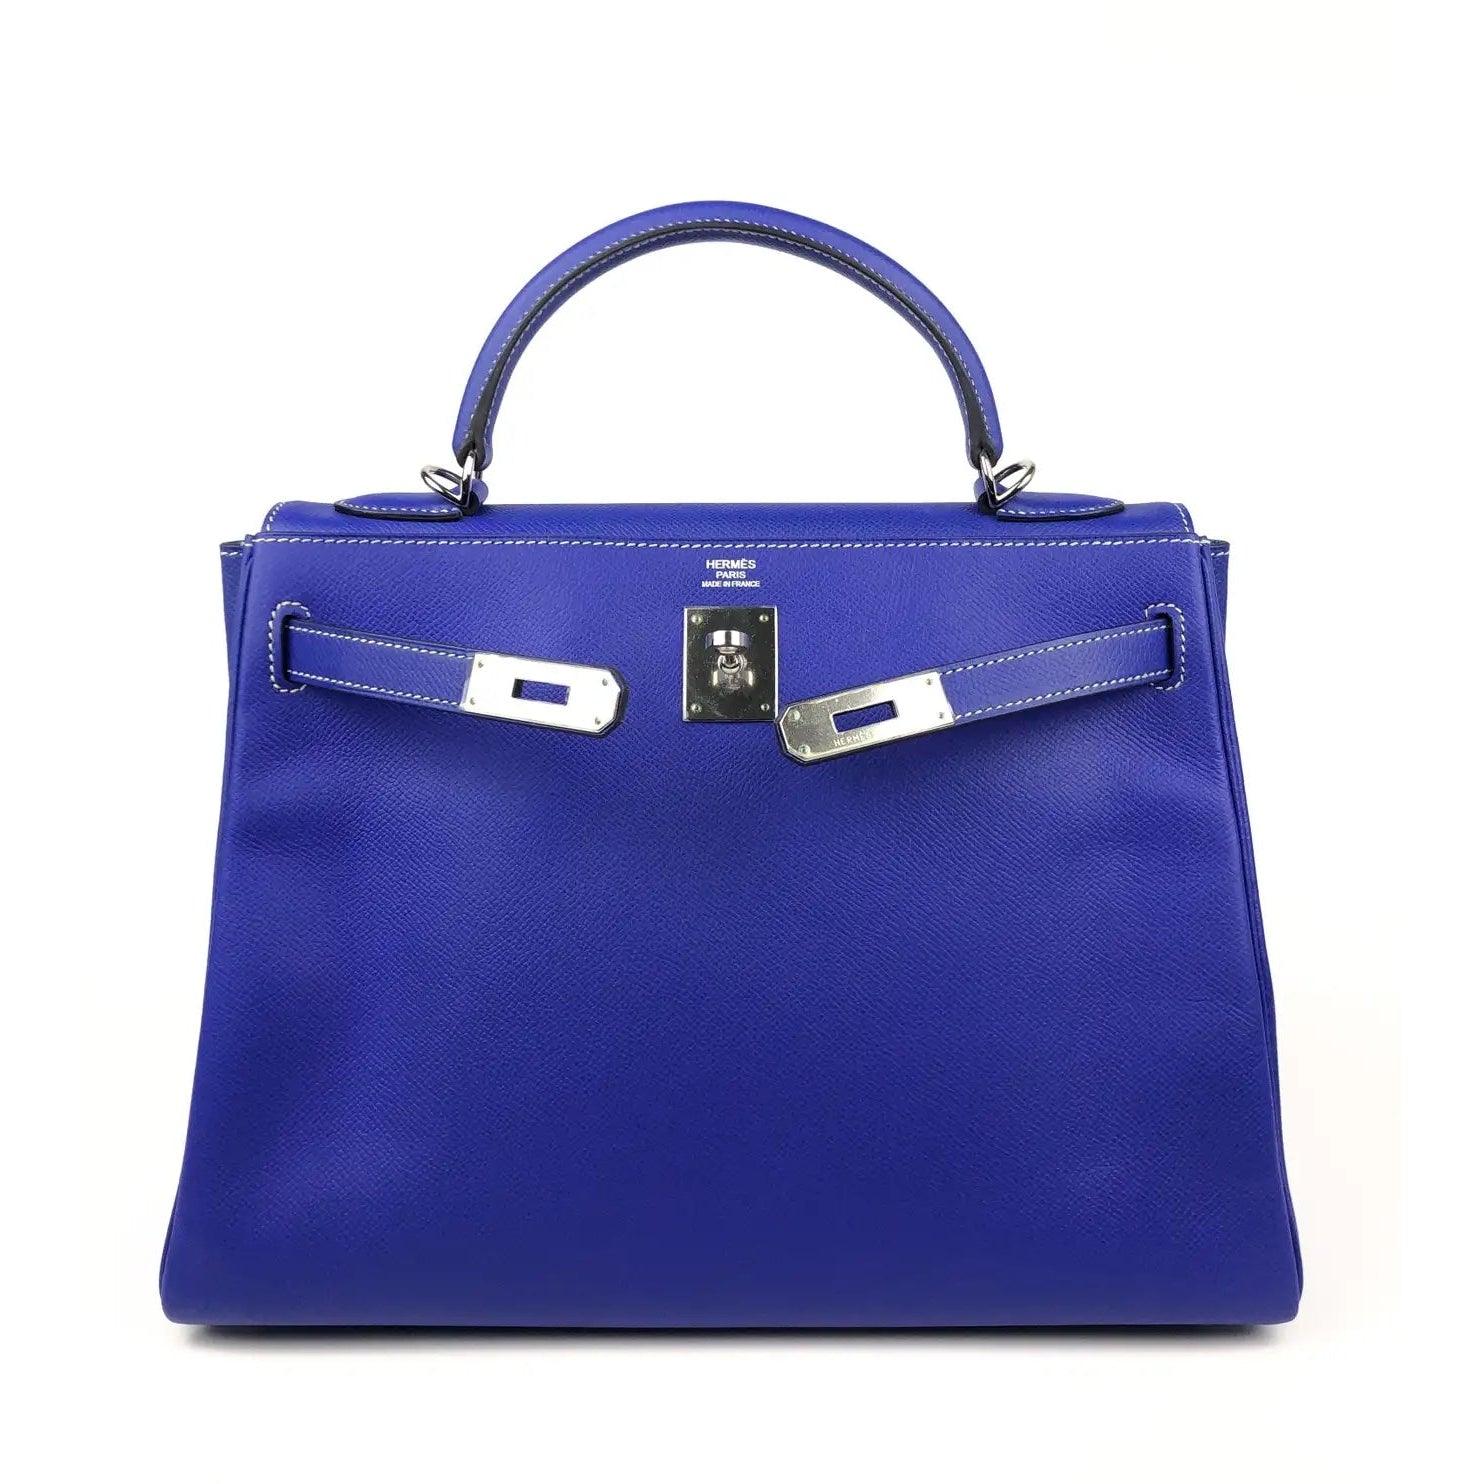 Hermès Birkin 25 Grey Leather Handbag (Pre-Owned)